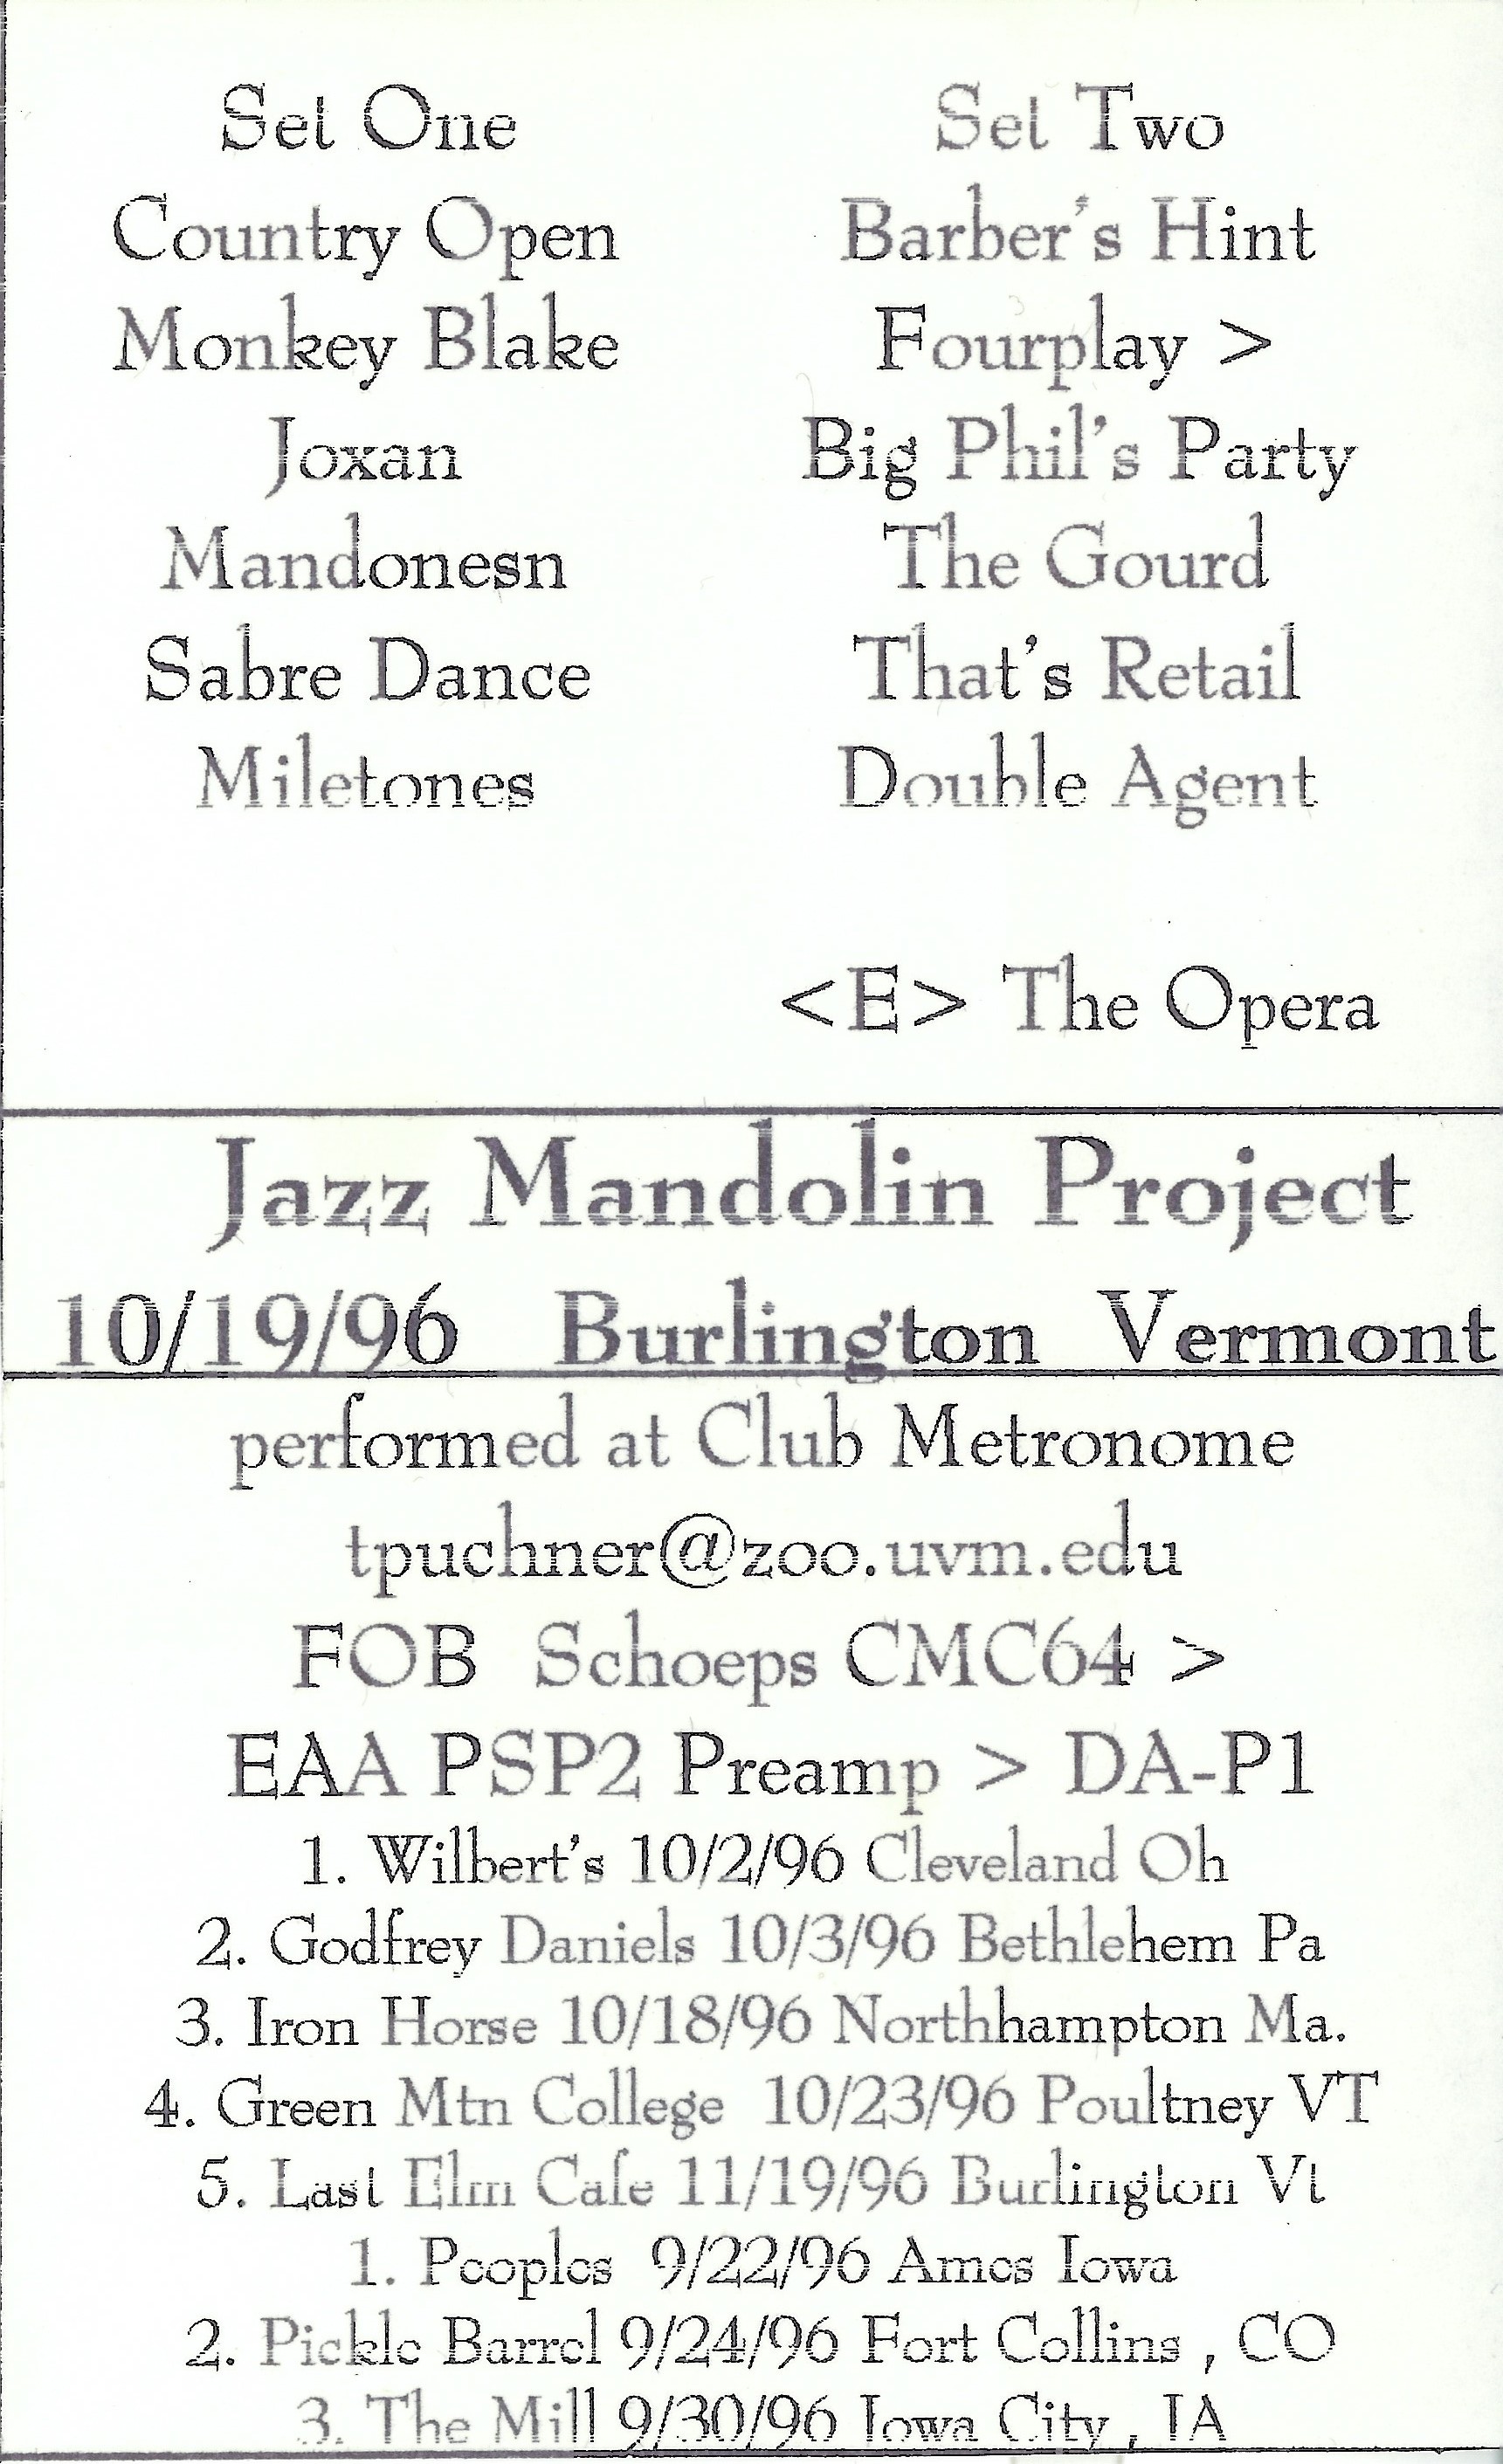 JazzMandolinProject1996-10-19BClubMetronomeBurlingtonVT.jpg